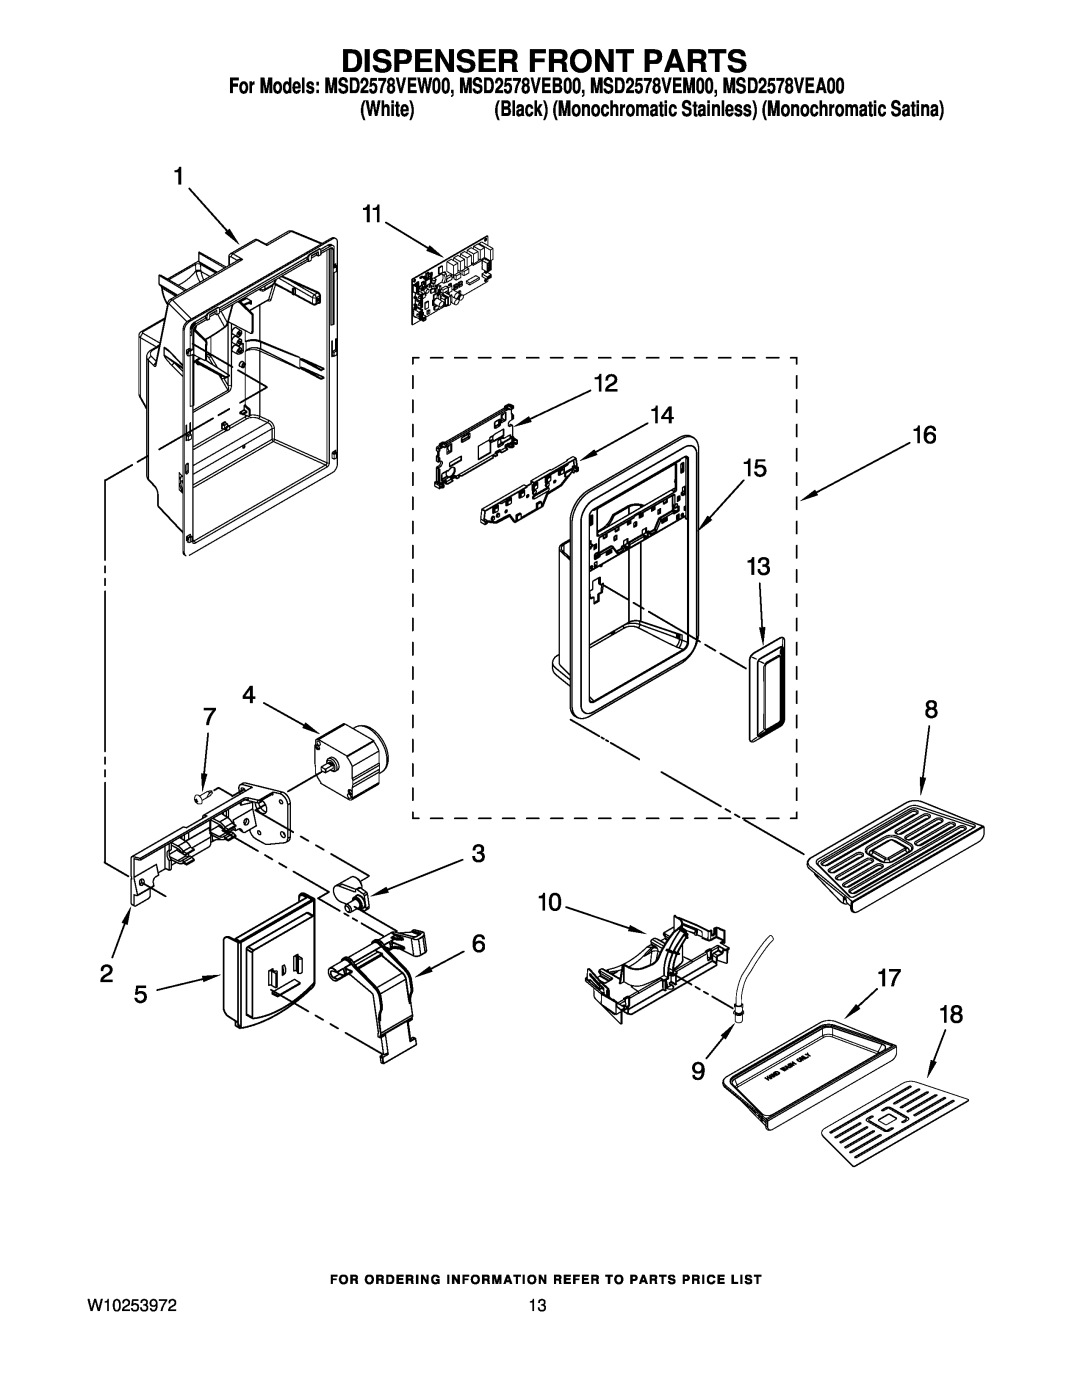 Maytag manual Dispenser Front Parts, For Models MSD2578VEW00, MSD2578VEB00, MSD2578VEM00, MSD2578VEA00, White 